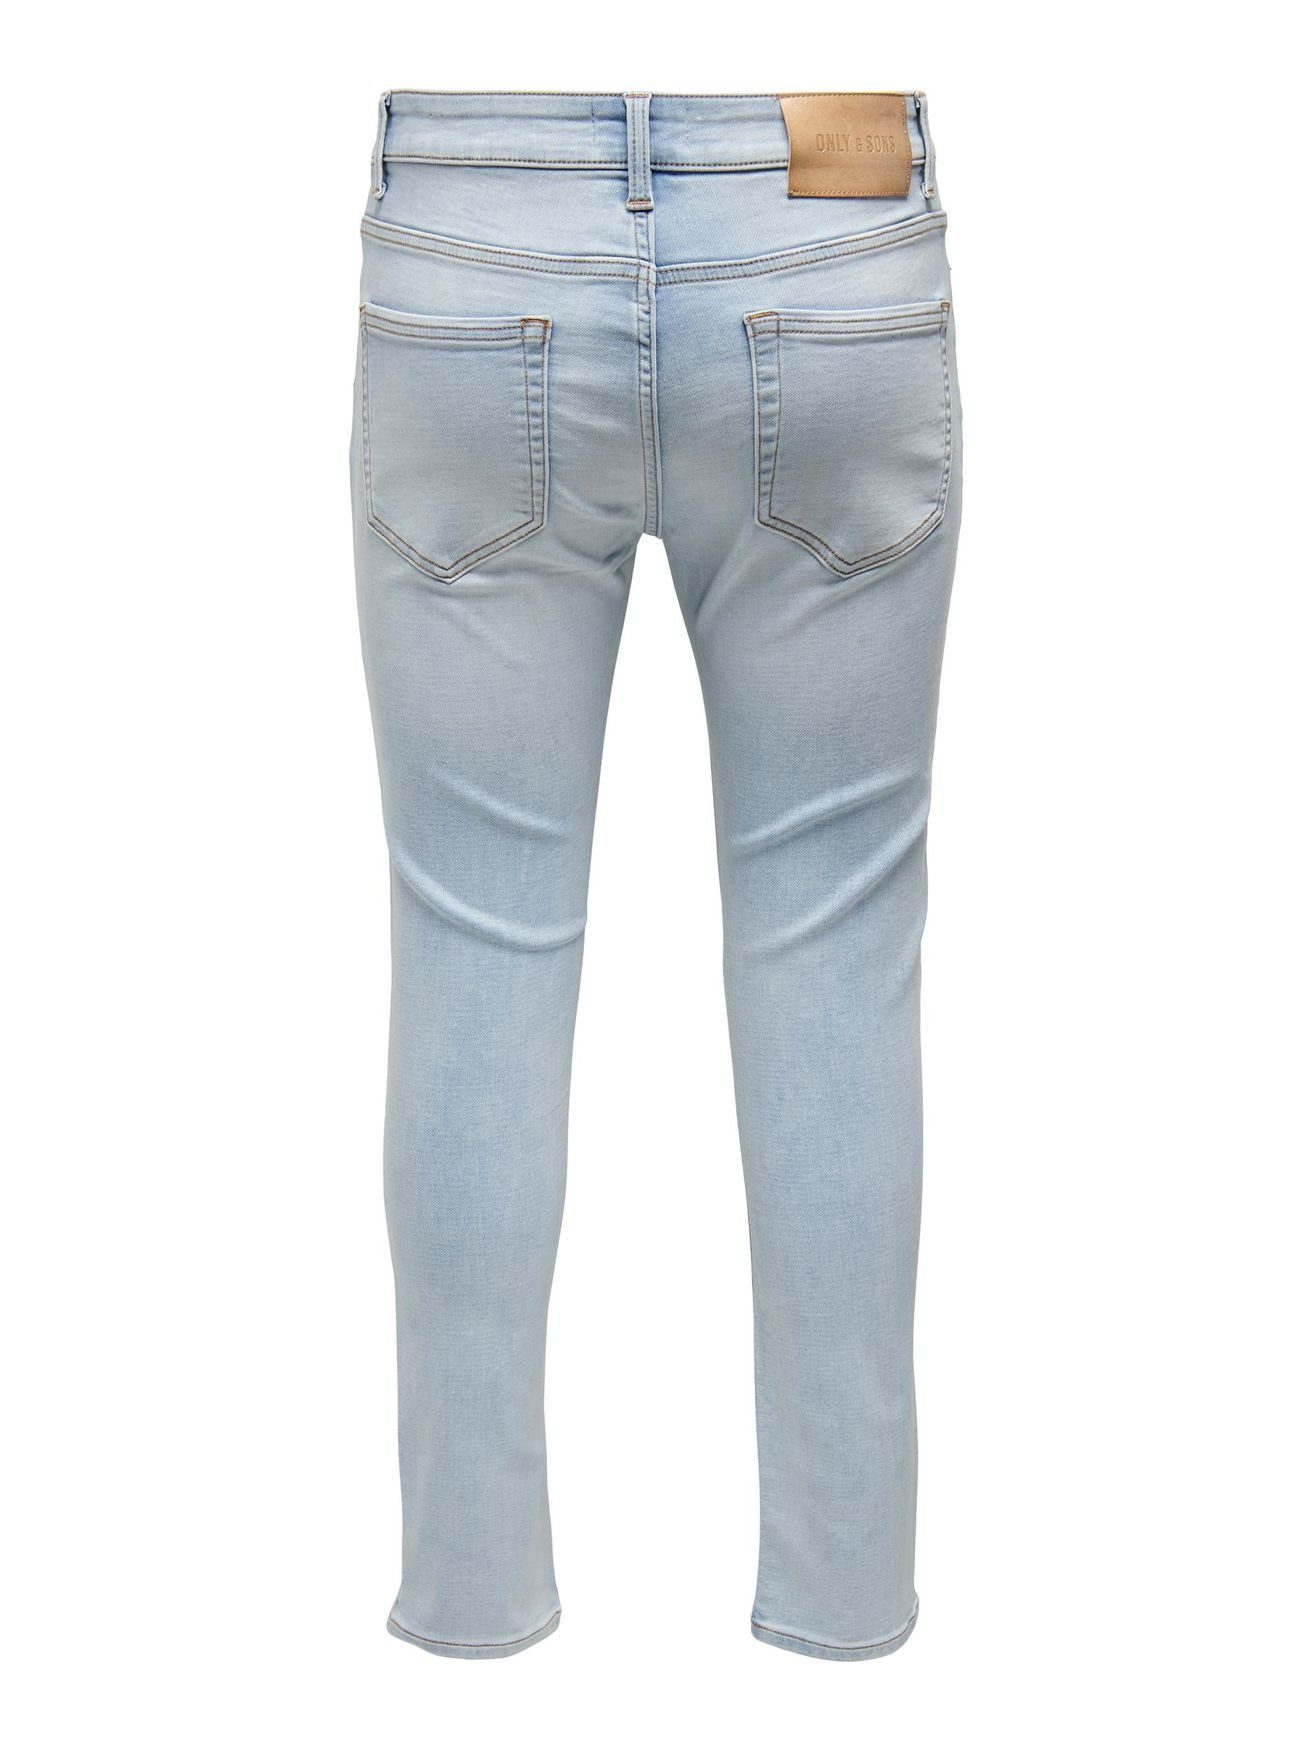 ONLY Jeans & Blau 4788 Slim-fit-Jeans ONSLOOM SONS Pants in Hose Slim Fit Basic Denim